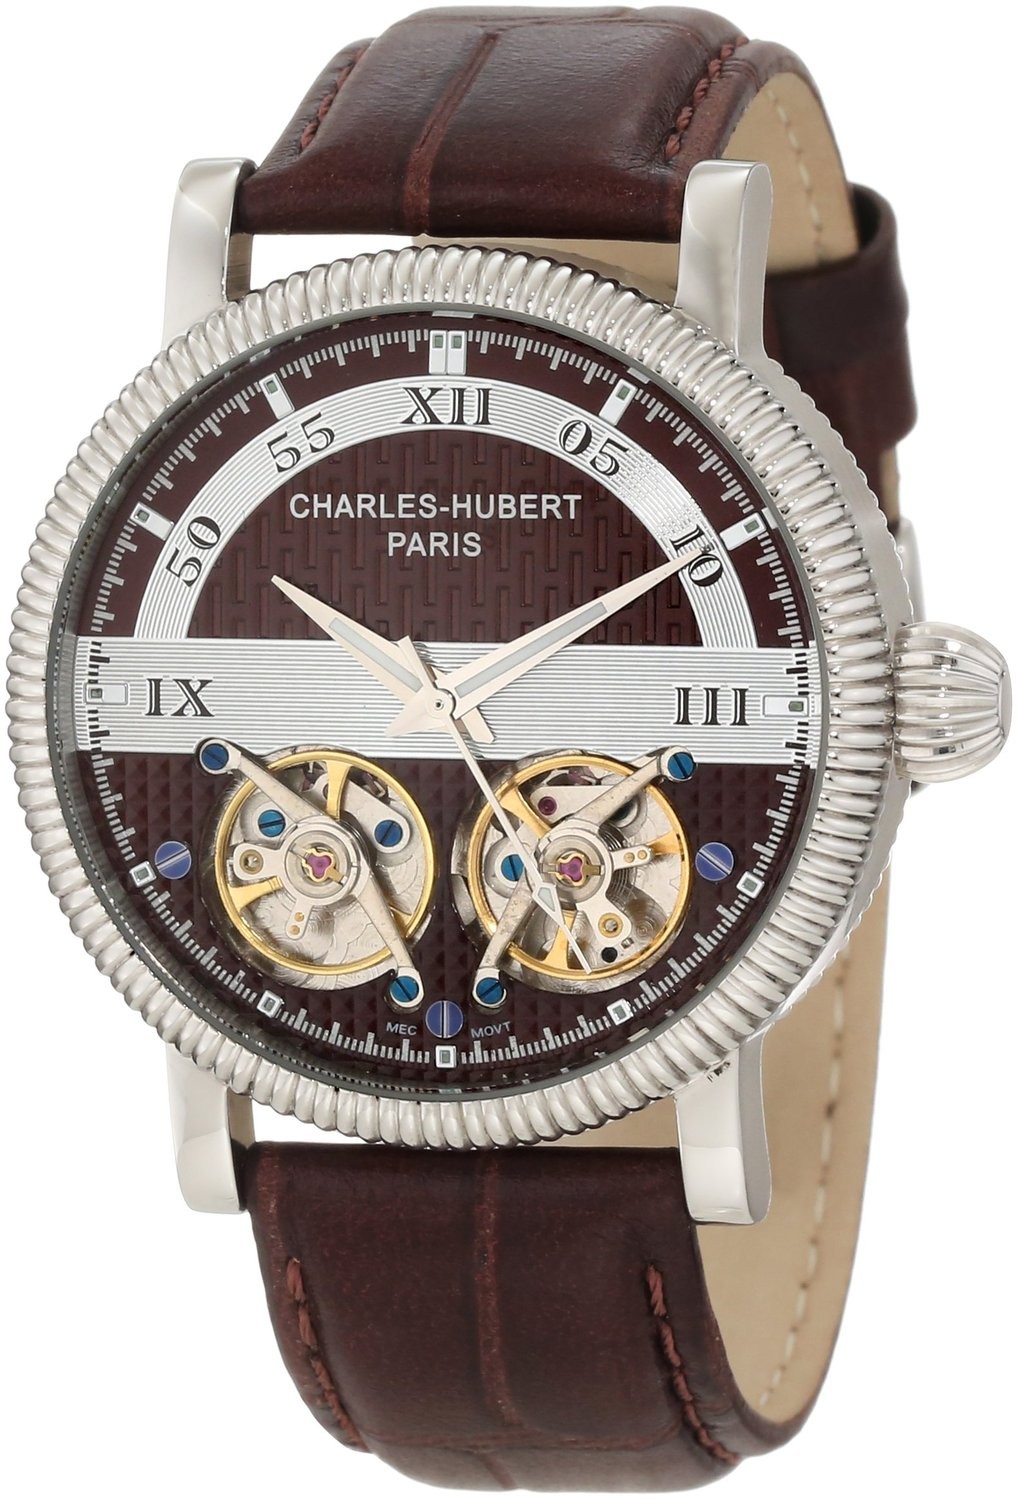 Charles-Hubert Paris Men's Stainless Steel Automatic Watch